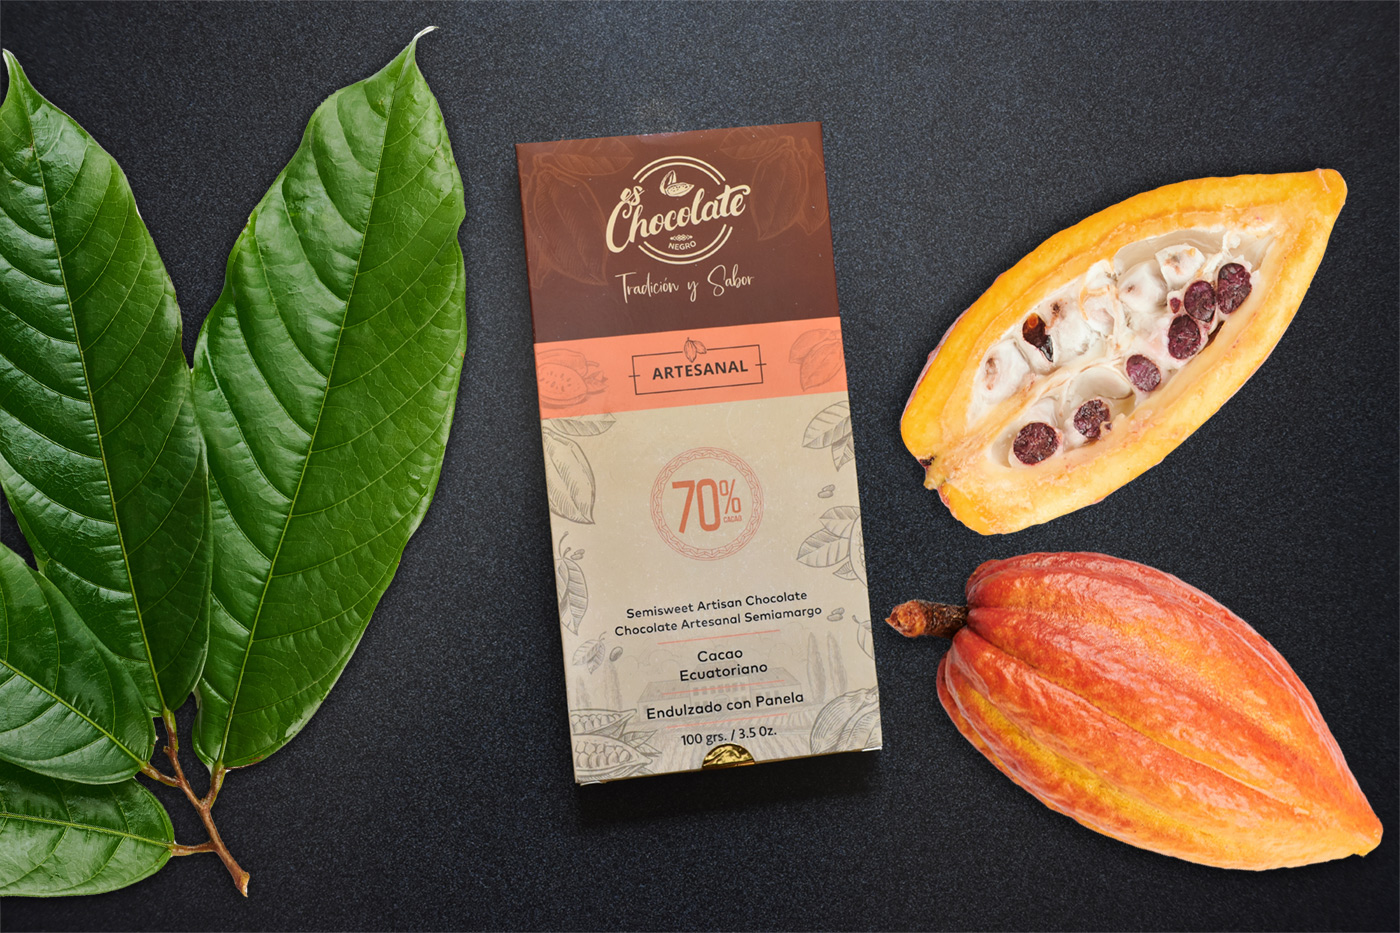 Artisanal Semisweet Chocolate, from Ecuador